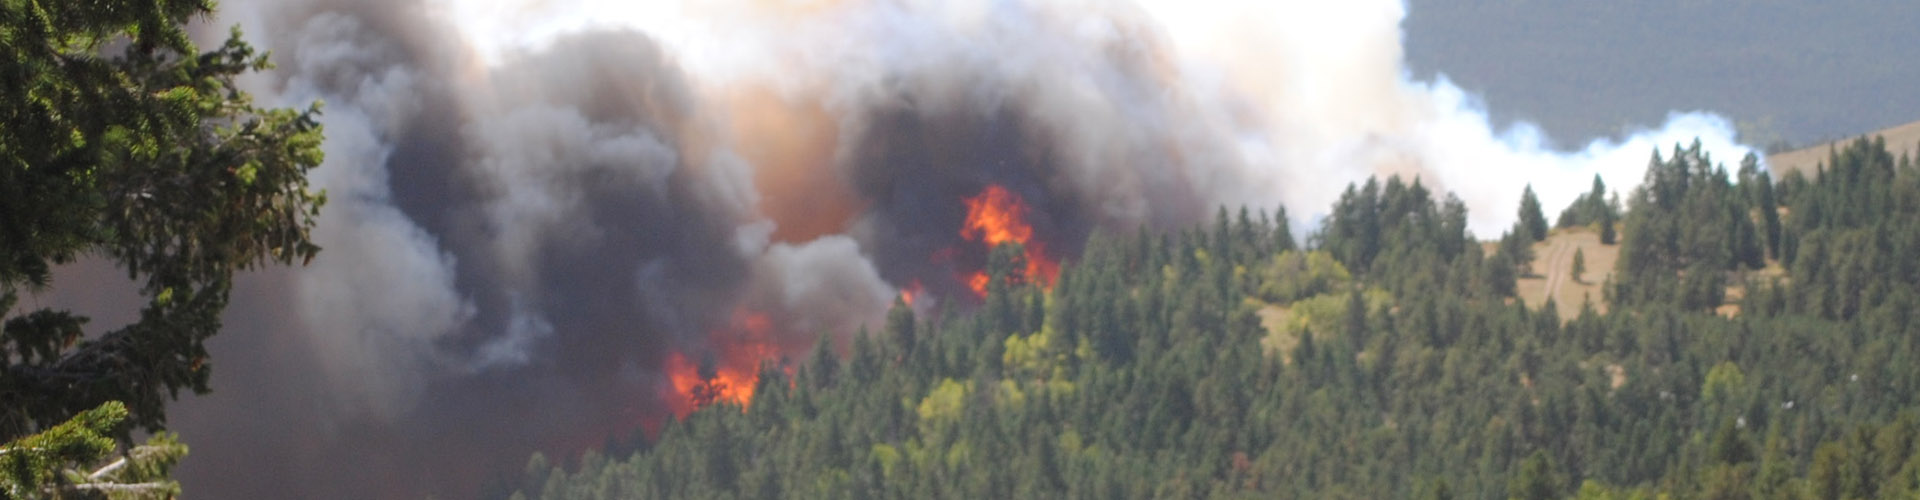 Wildland fire burning in Boulder County foothills